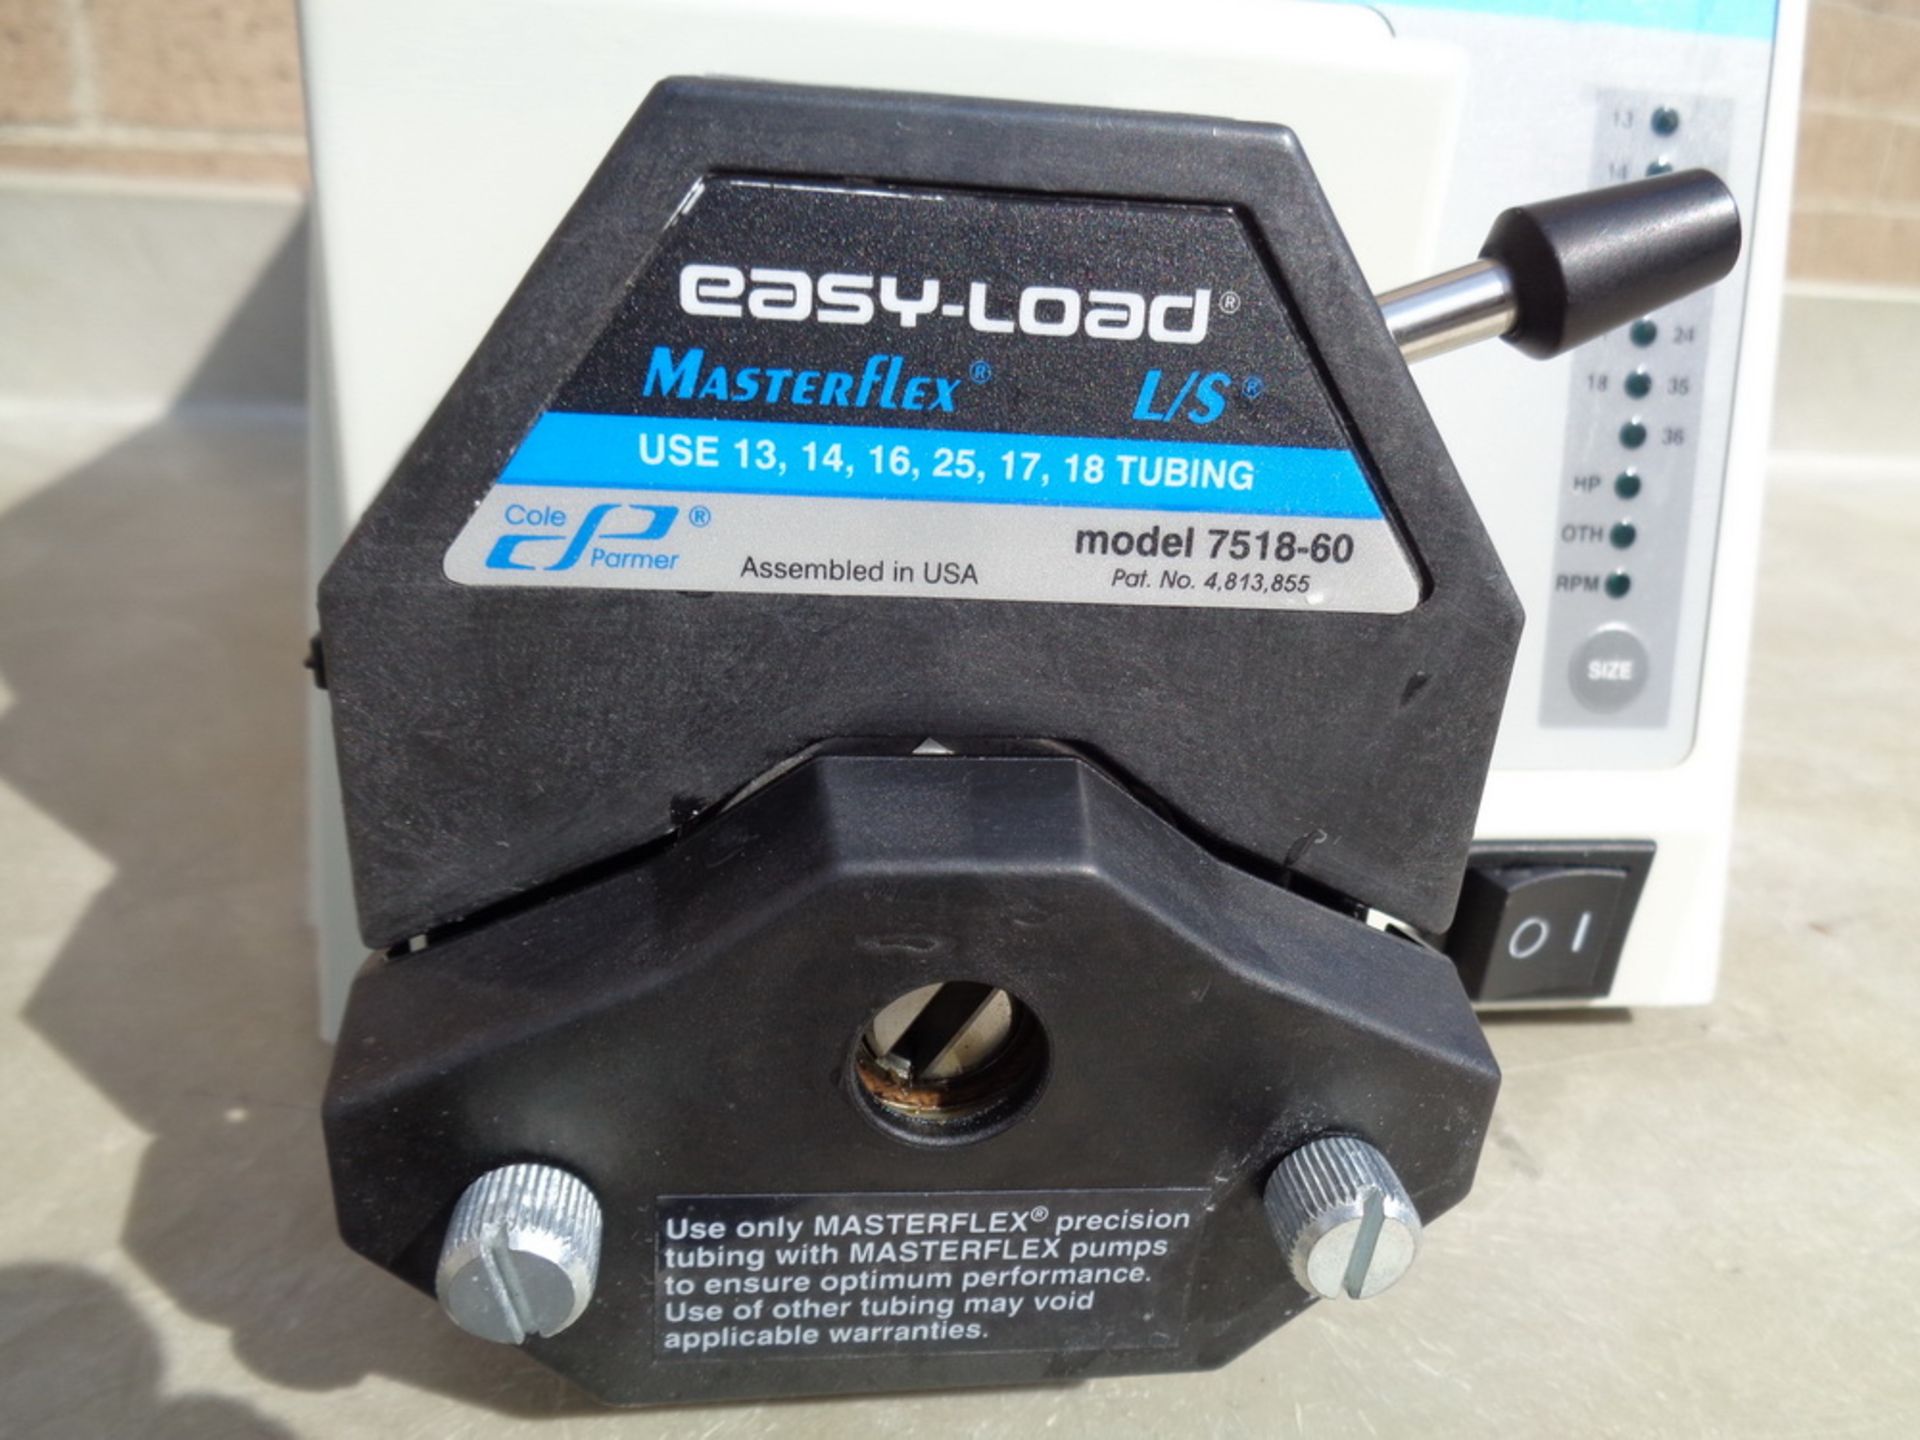 Cole Parmer Masterflex L/S Easy-Load Pump, Model 7518-60 - Image 2 of 3